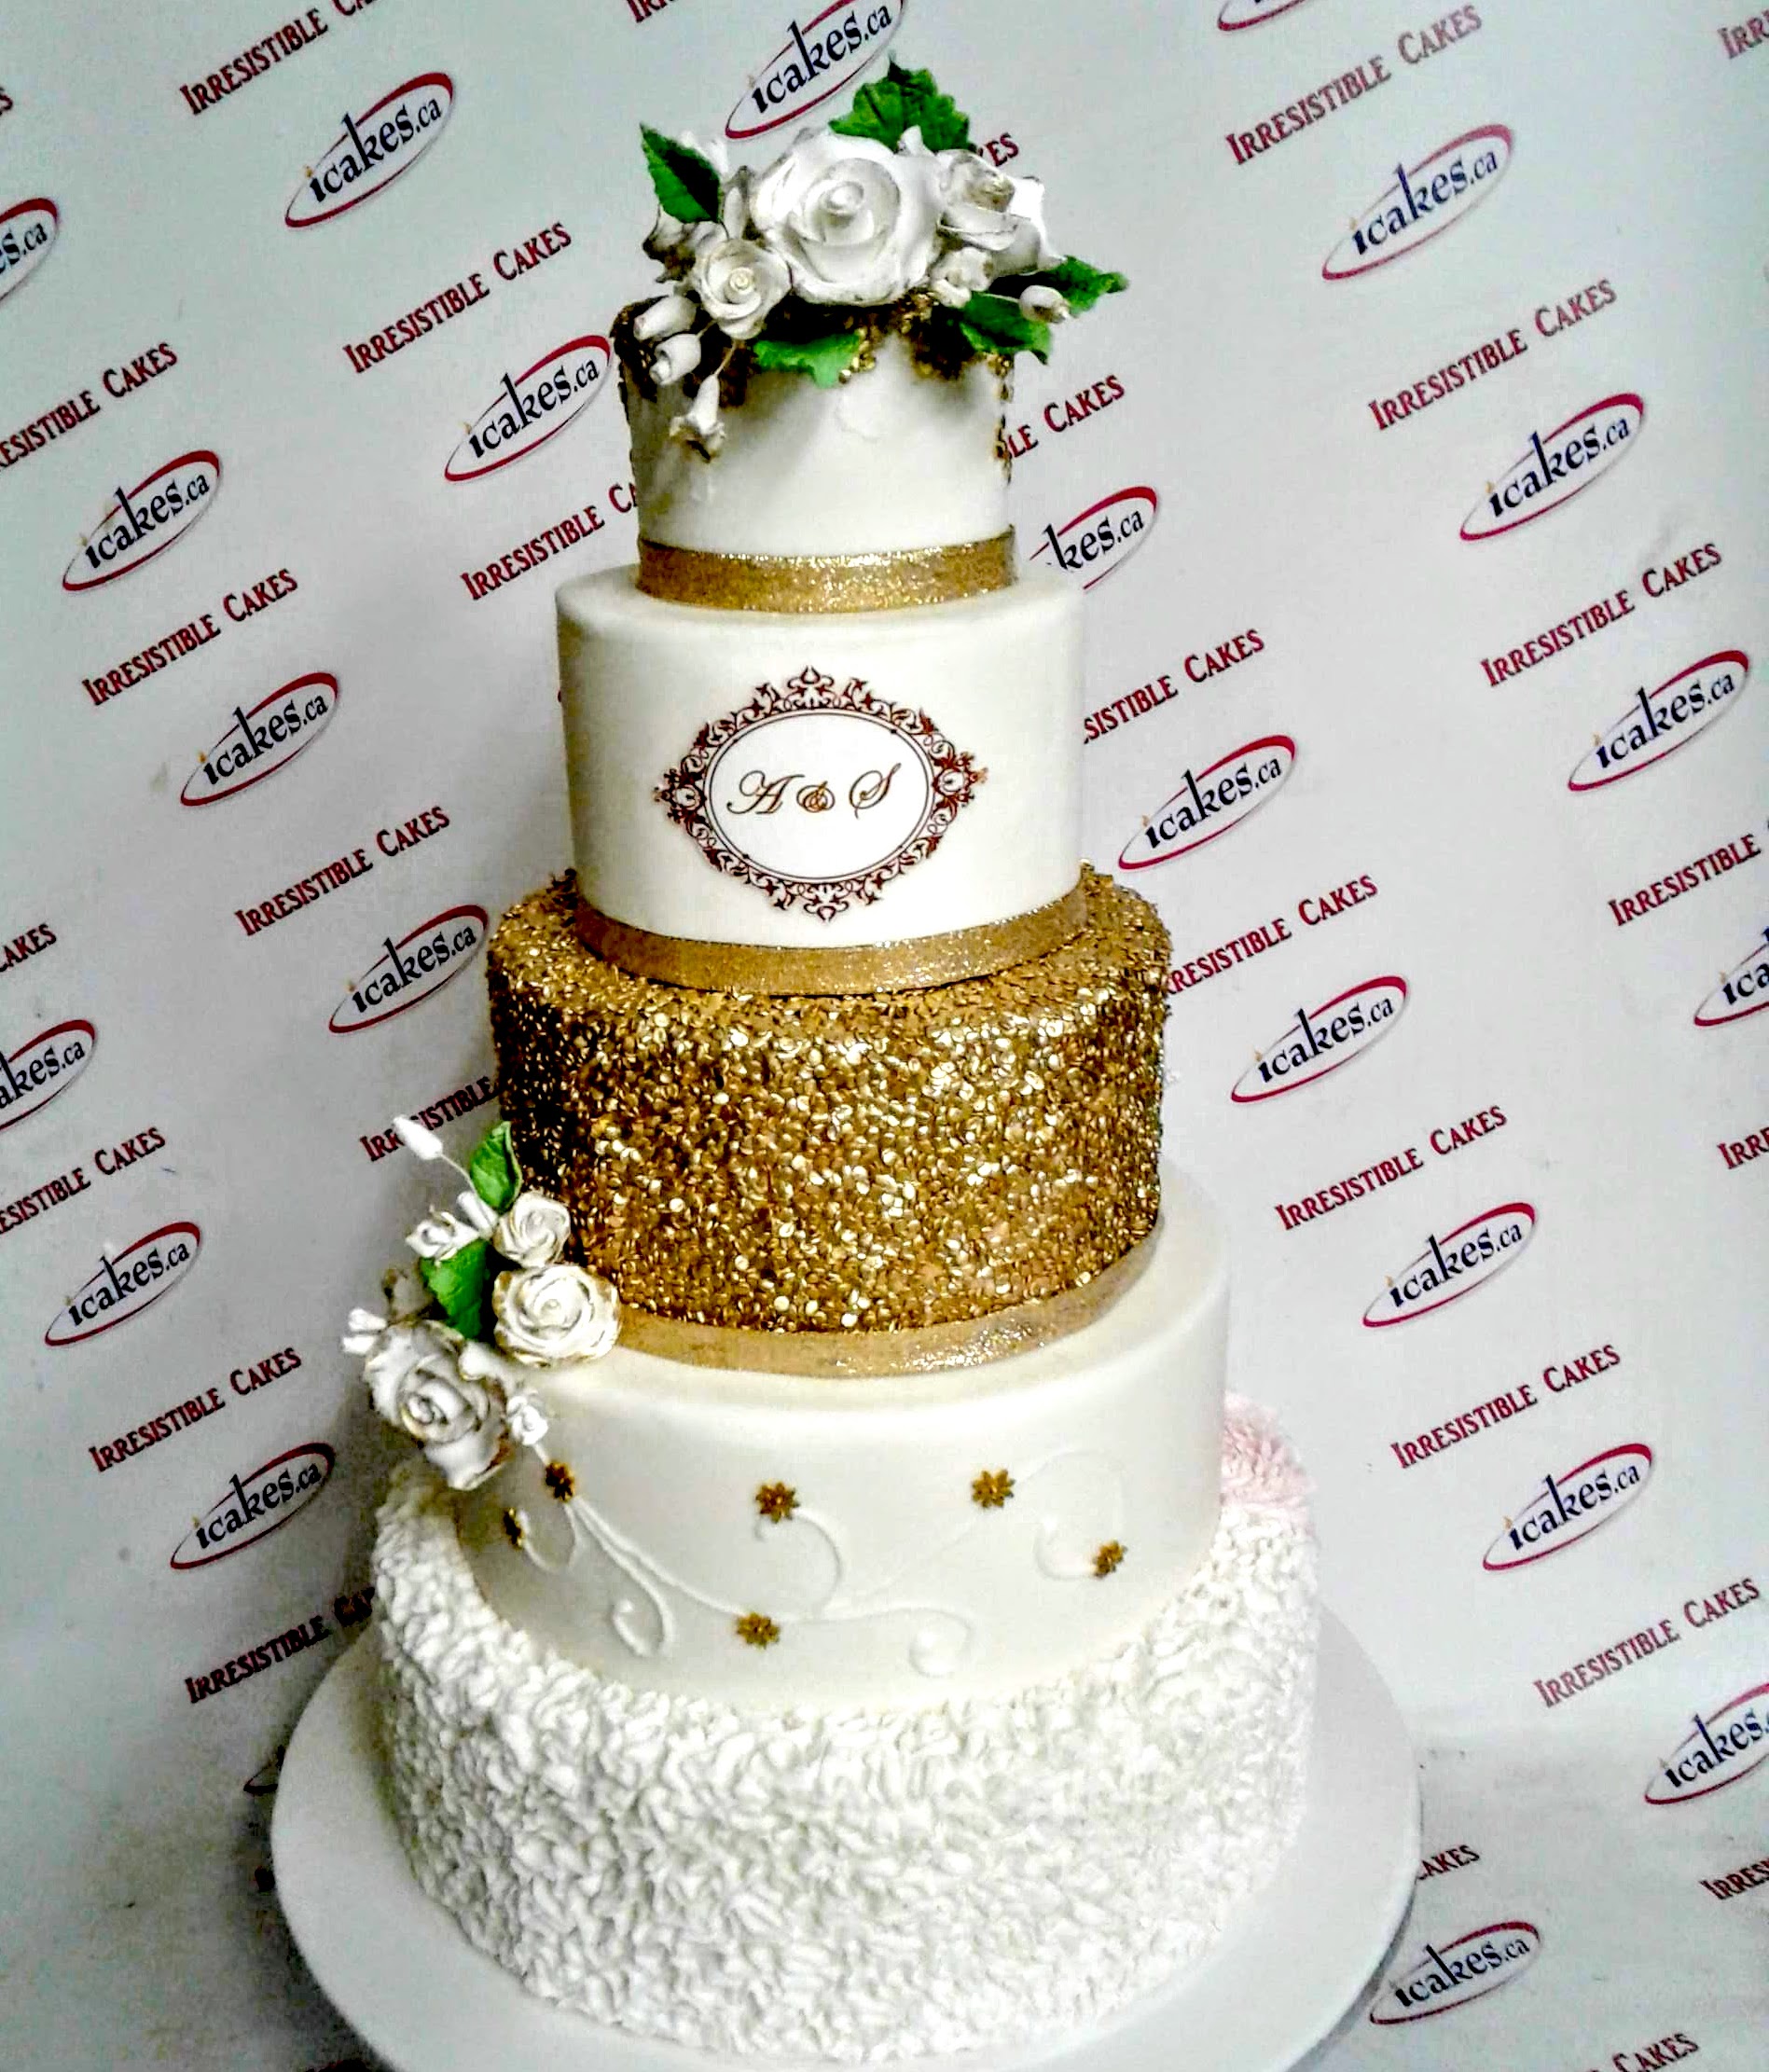 Apsara Exclusive Wedding Cakes Toronto From Irresistible